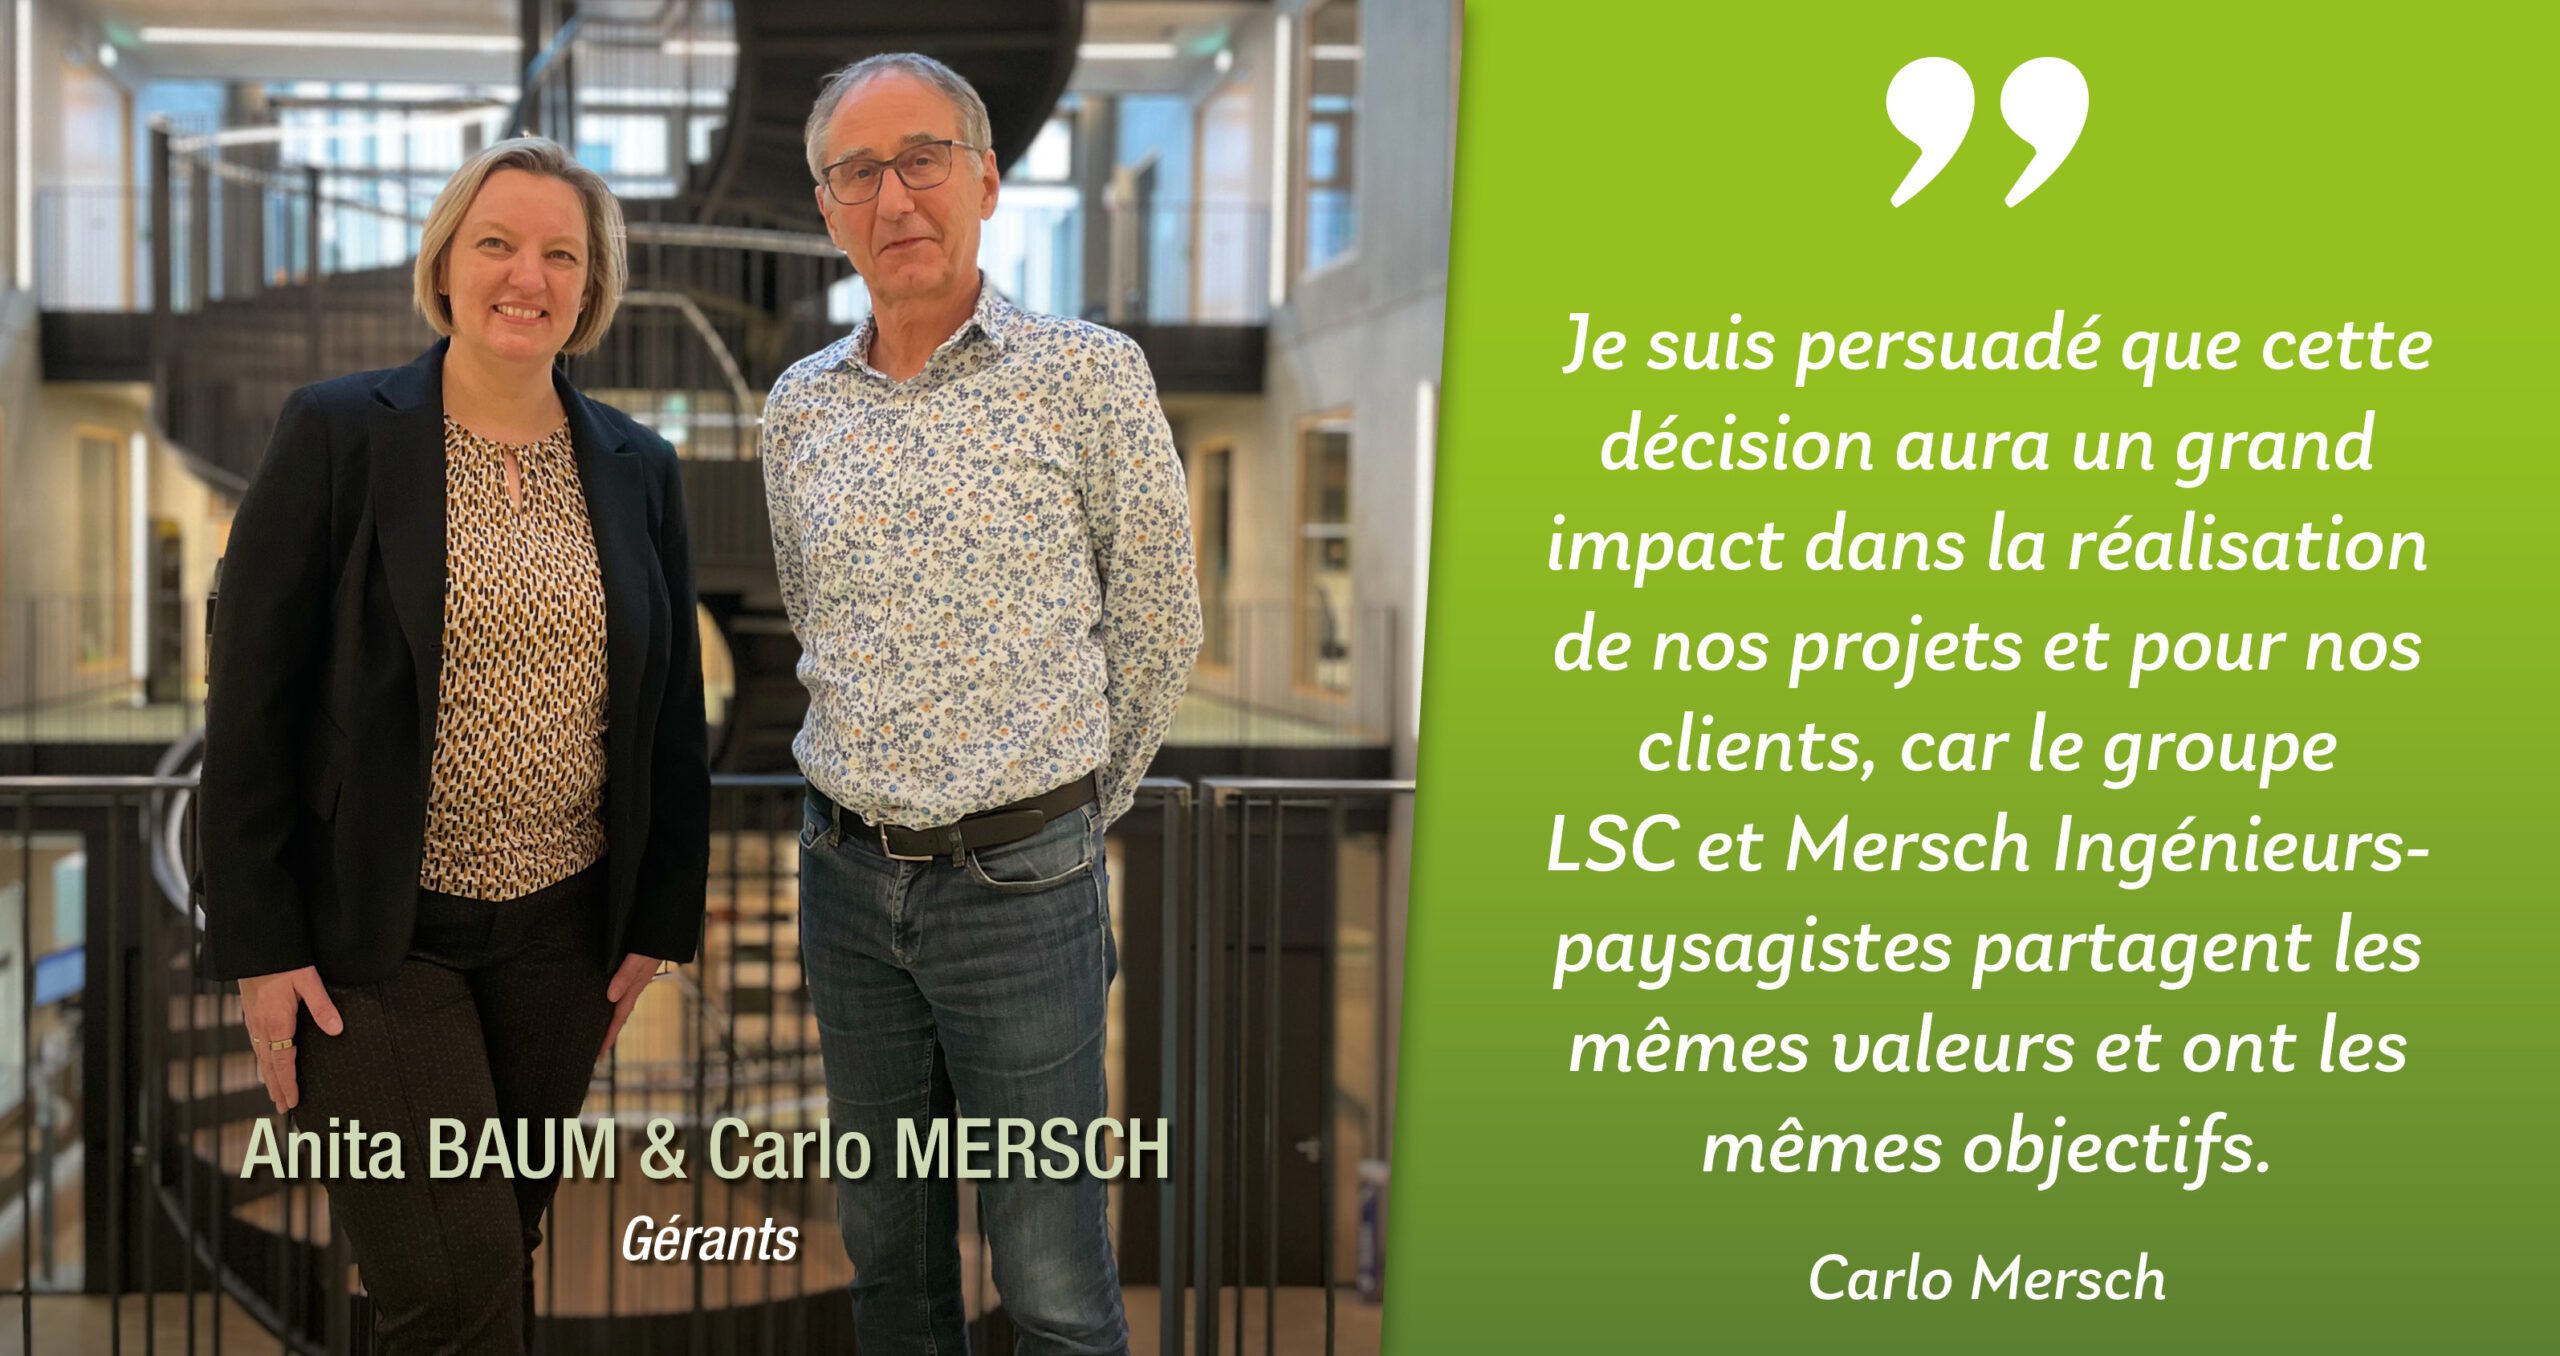 Mersch Ingénieurs-paysagistes intègre LSC Engineering Group